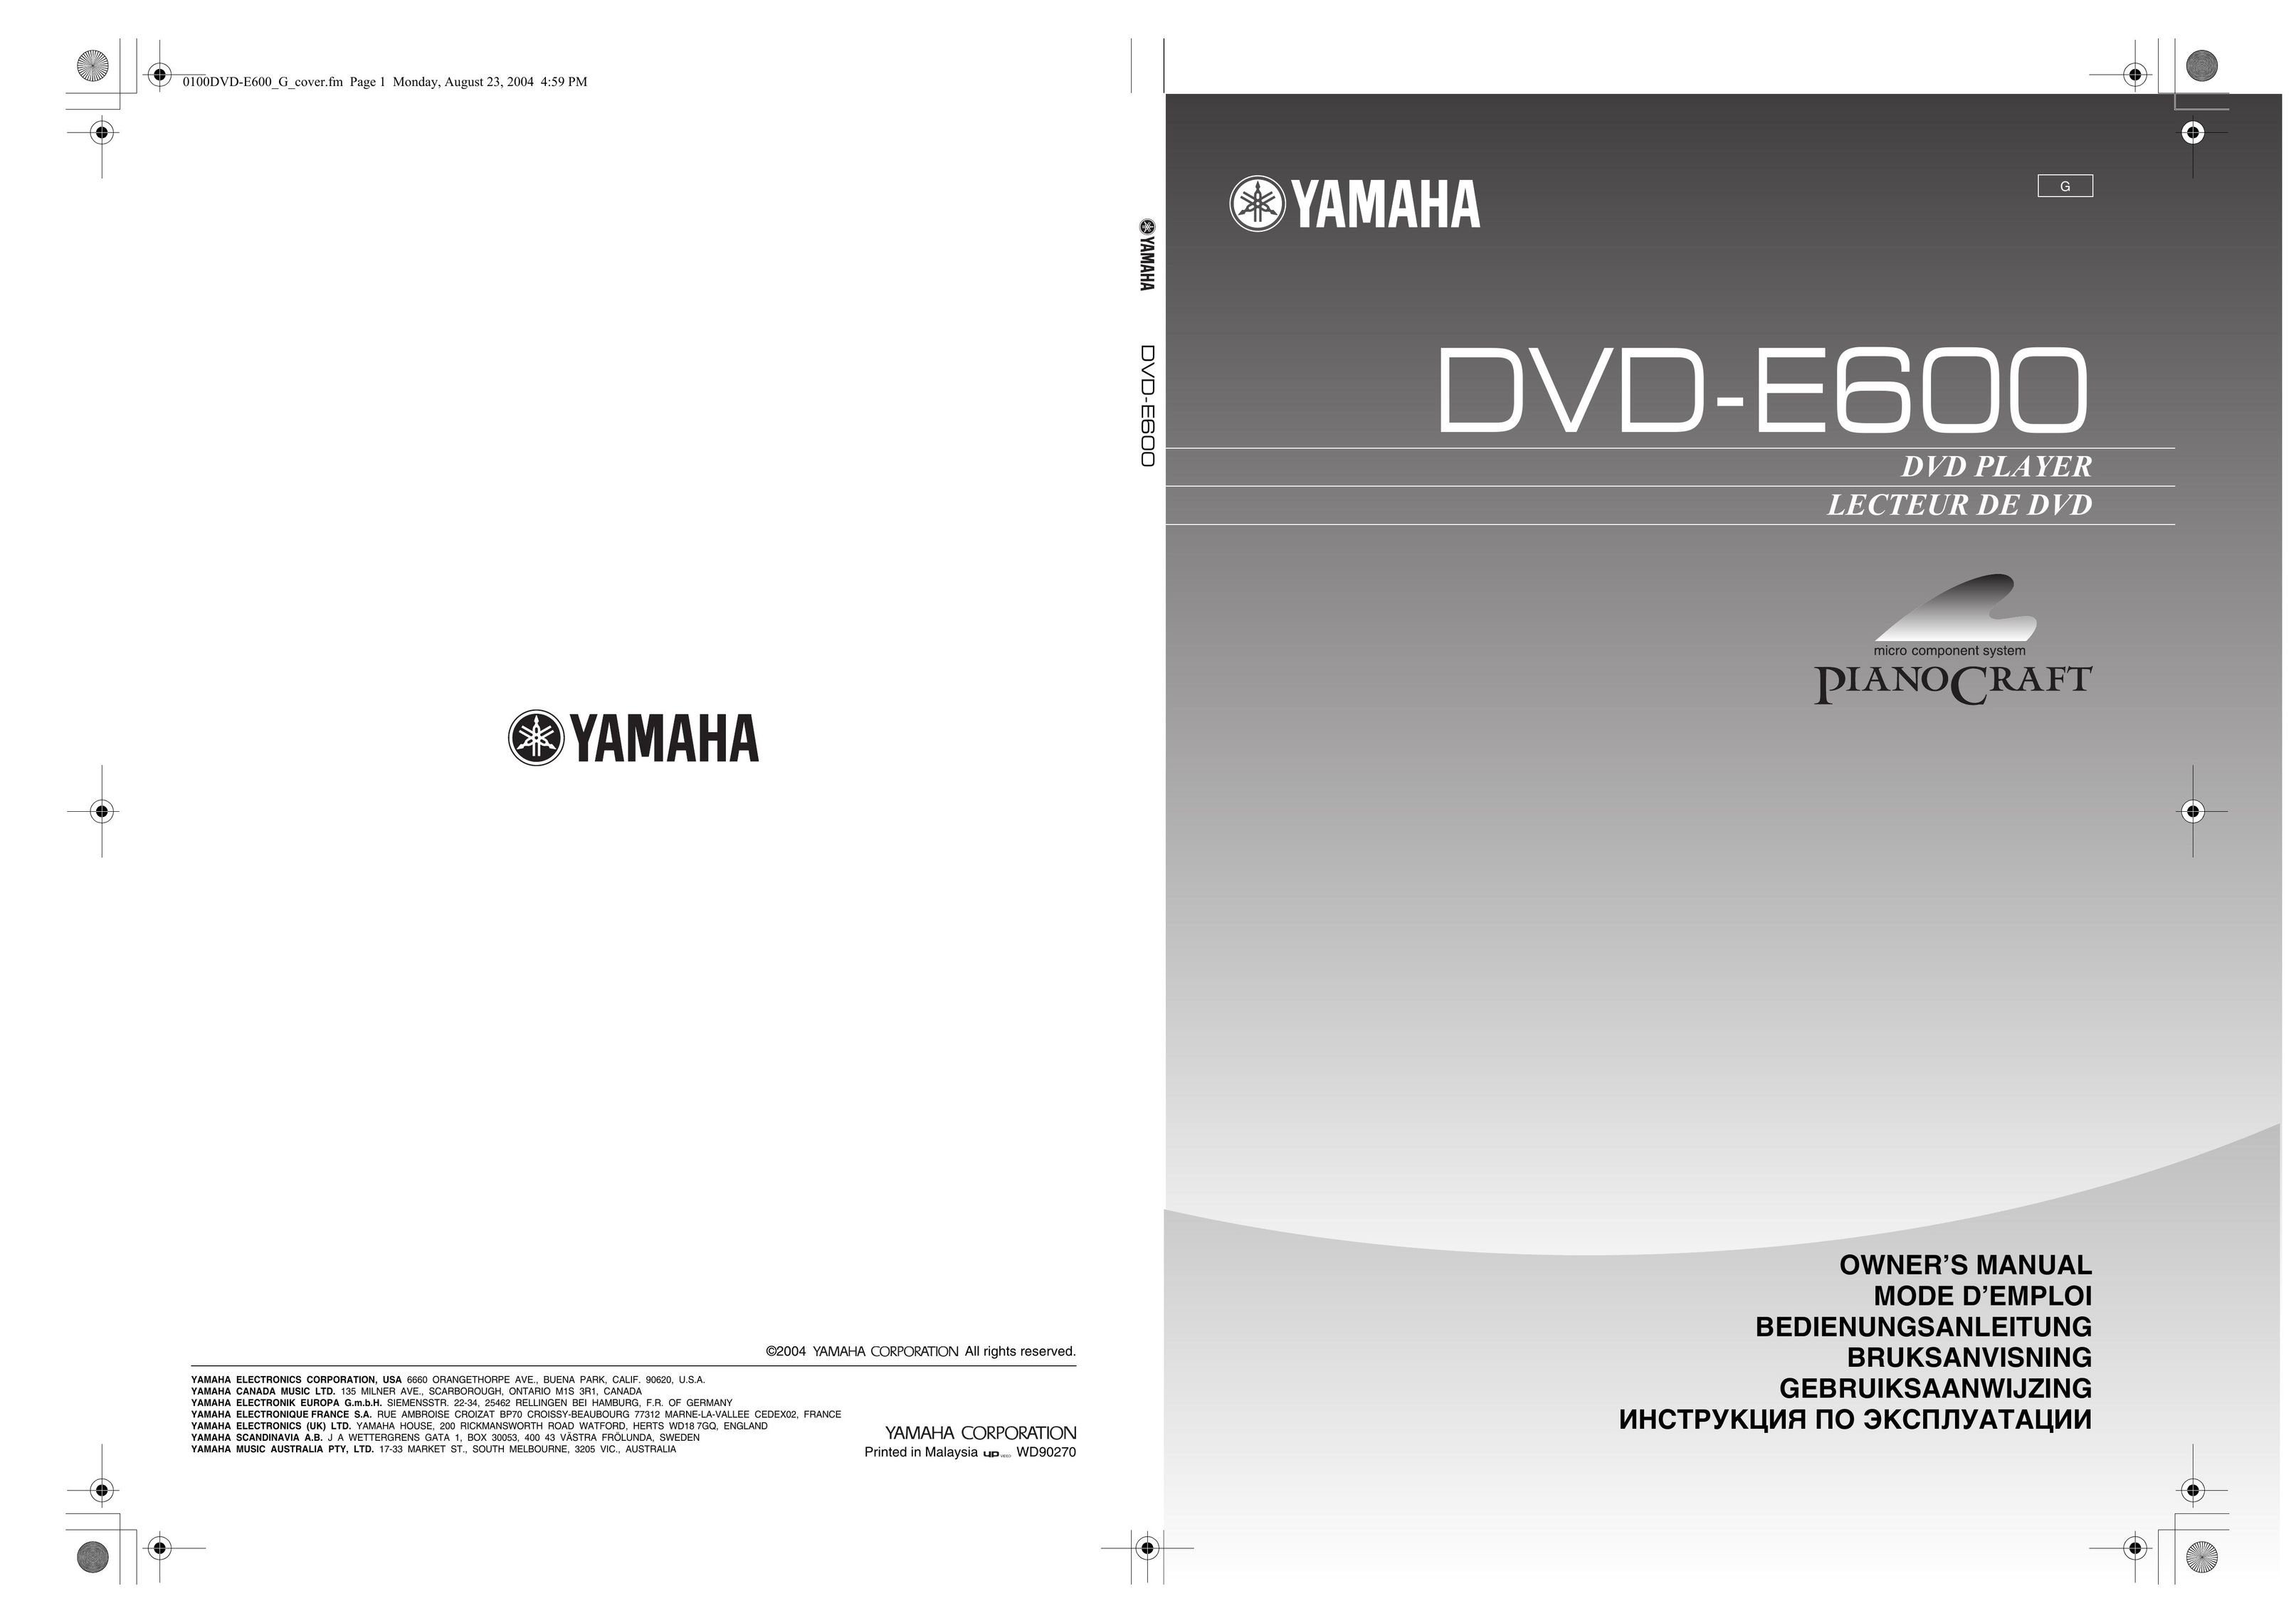 Yamaha DVD-E600 DVD Player User Manual